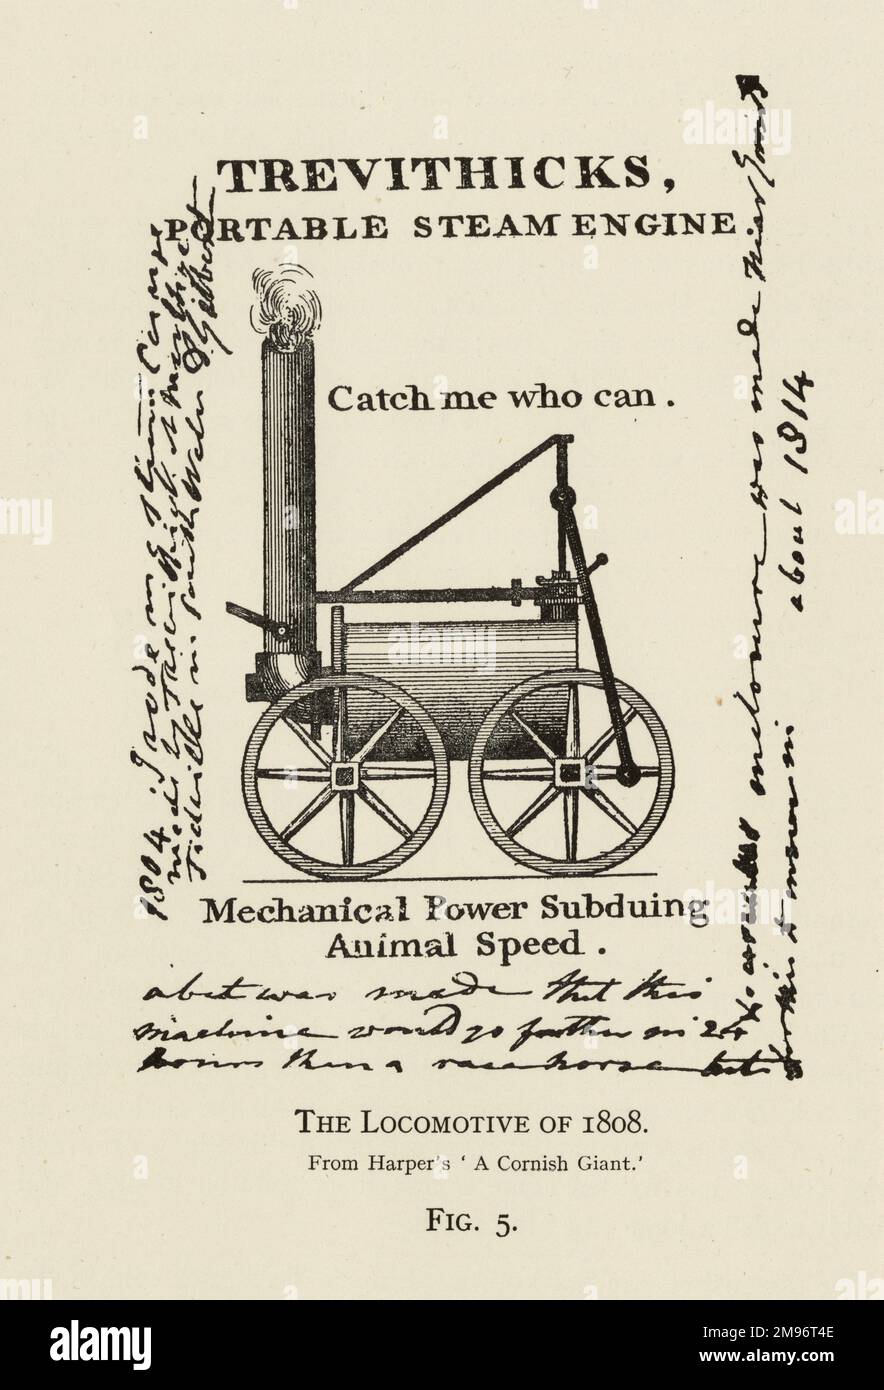 Il motore a vapore portatile di Trevitthick del 1808, "catch me who CAN" (catch me who CAN) Foto Stock